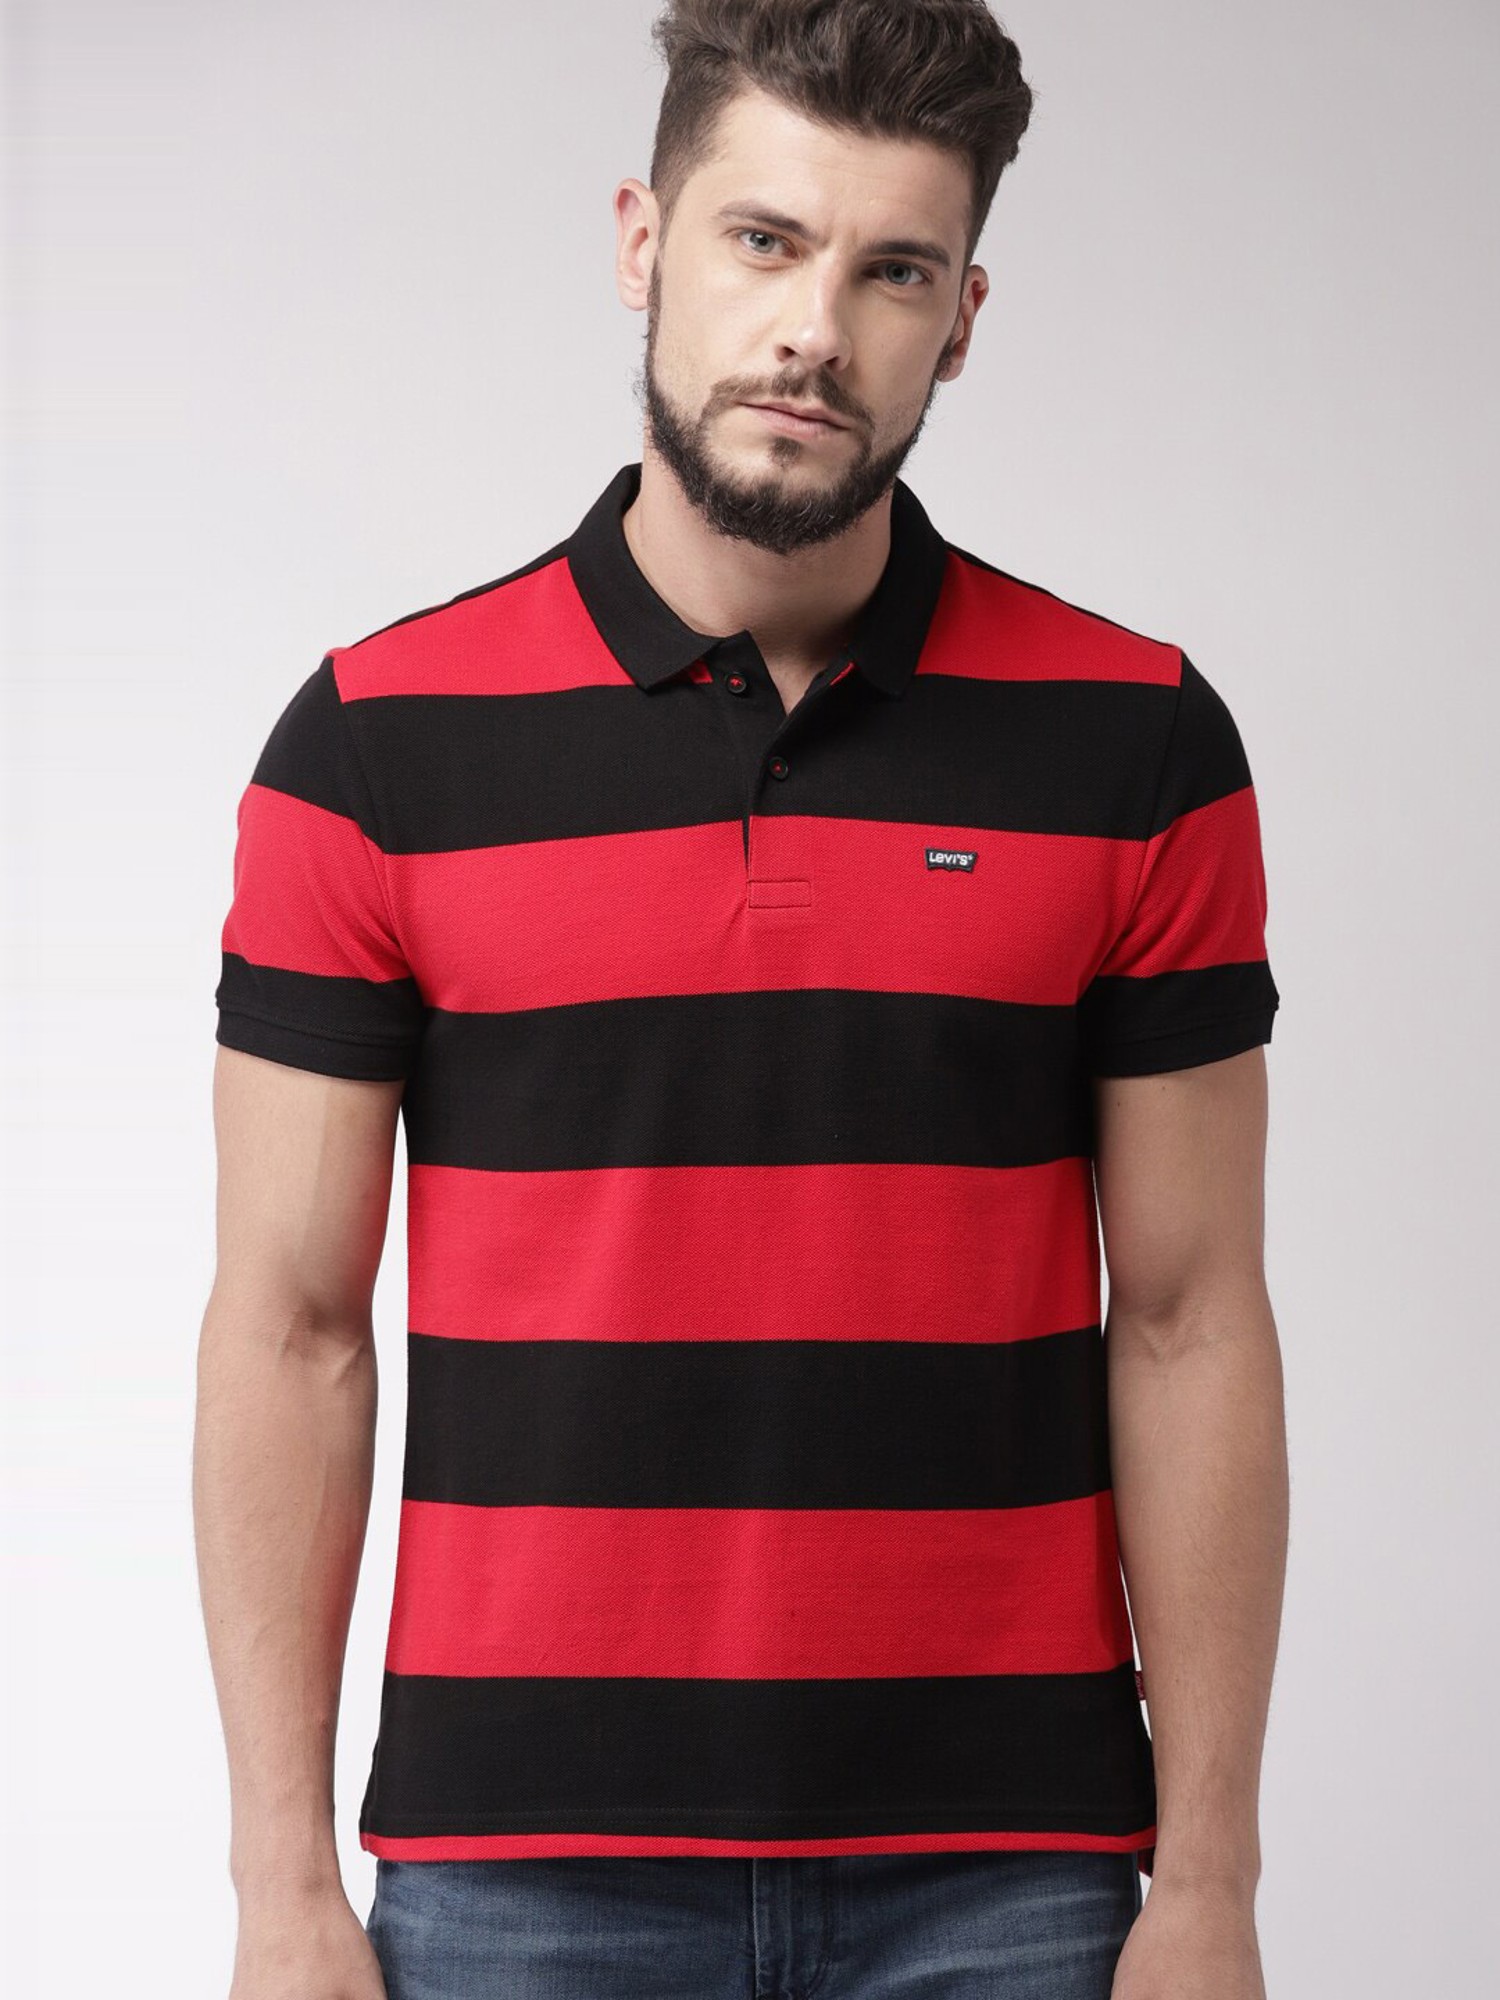 Buy Levi'S Red & Black Cotton Polo T-Shirt for Mens Online @ Tata CLiQ